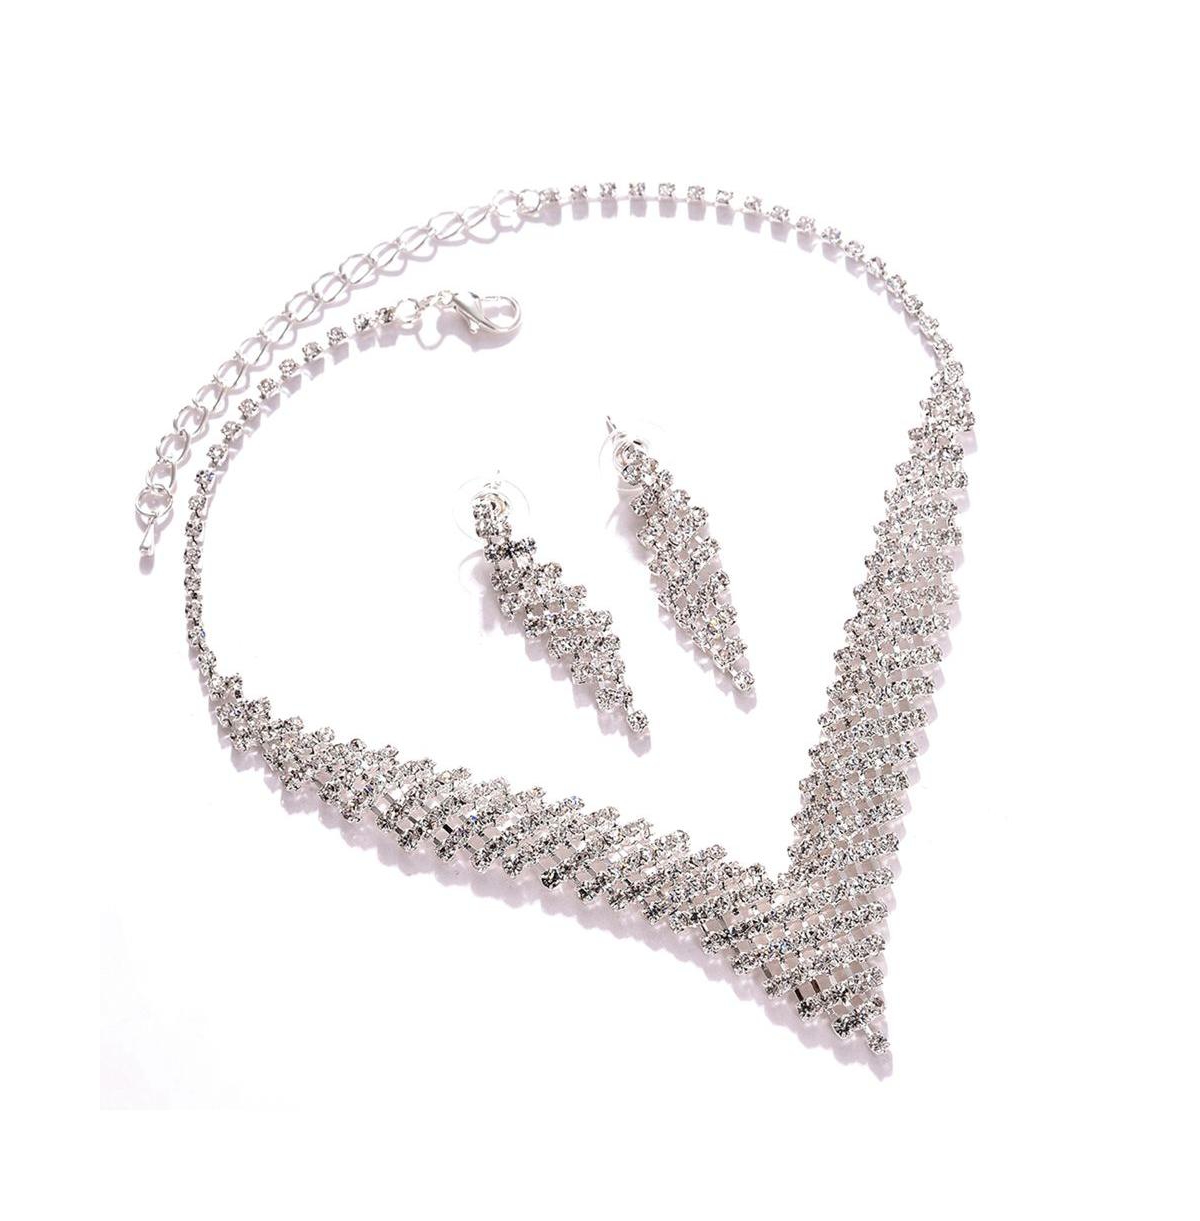 Women's Silver Bling Cluster Jewelry Set - Silver